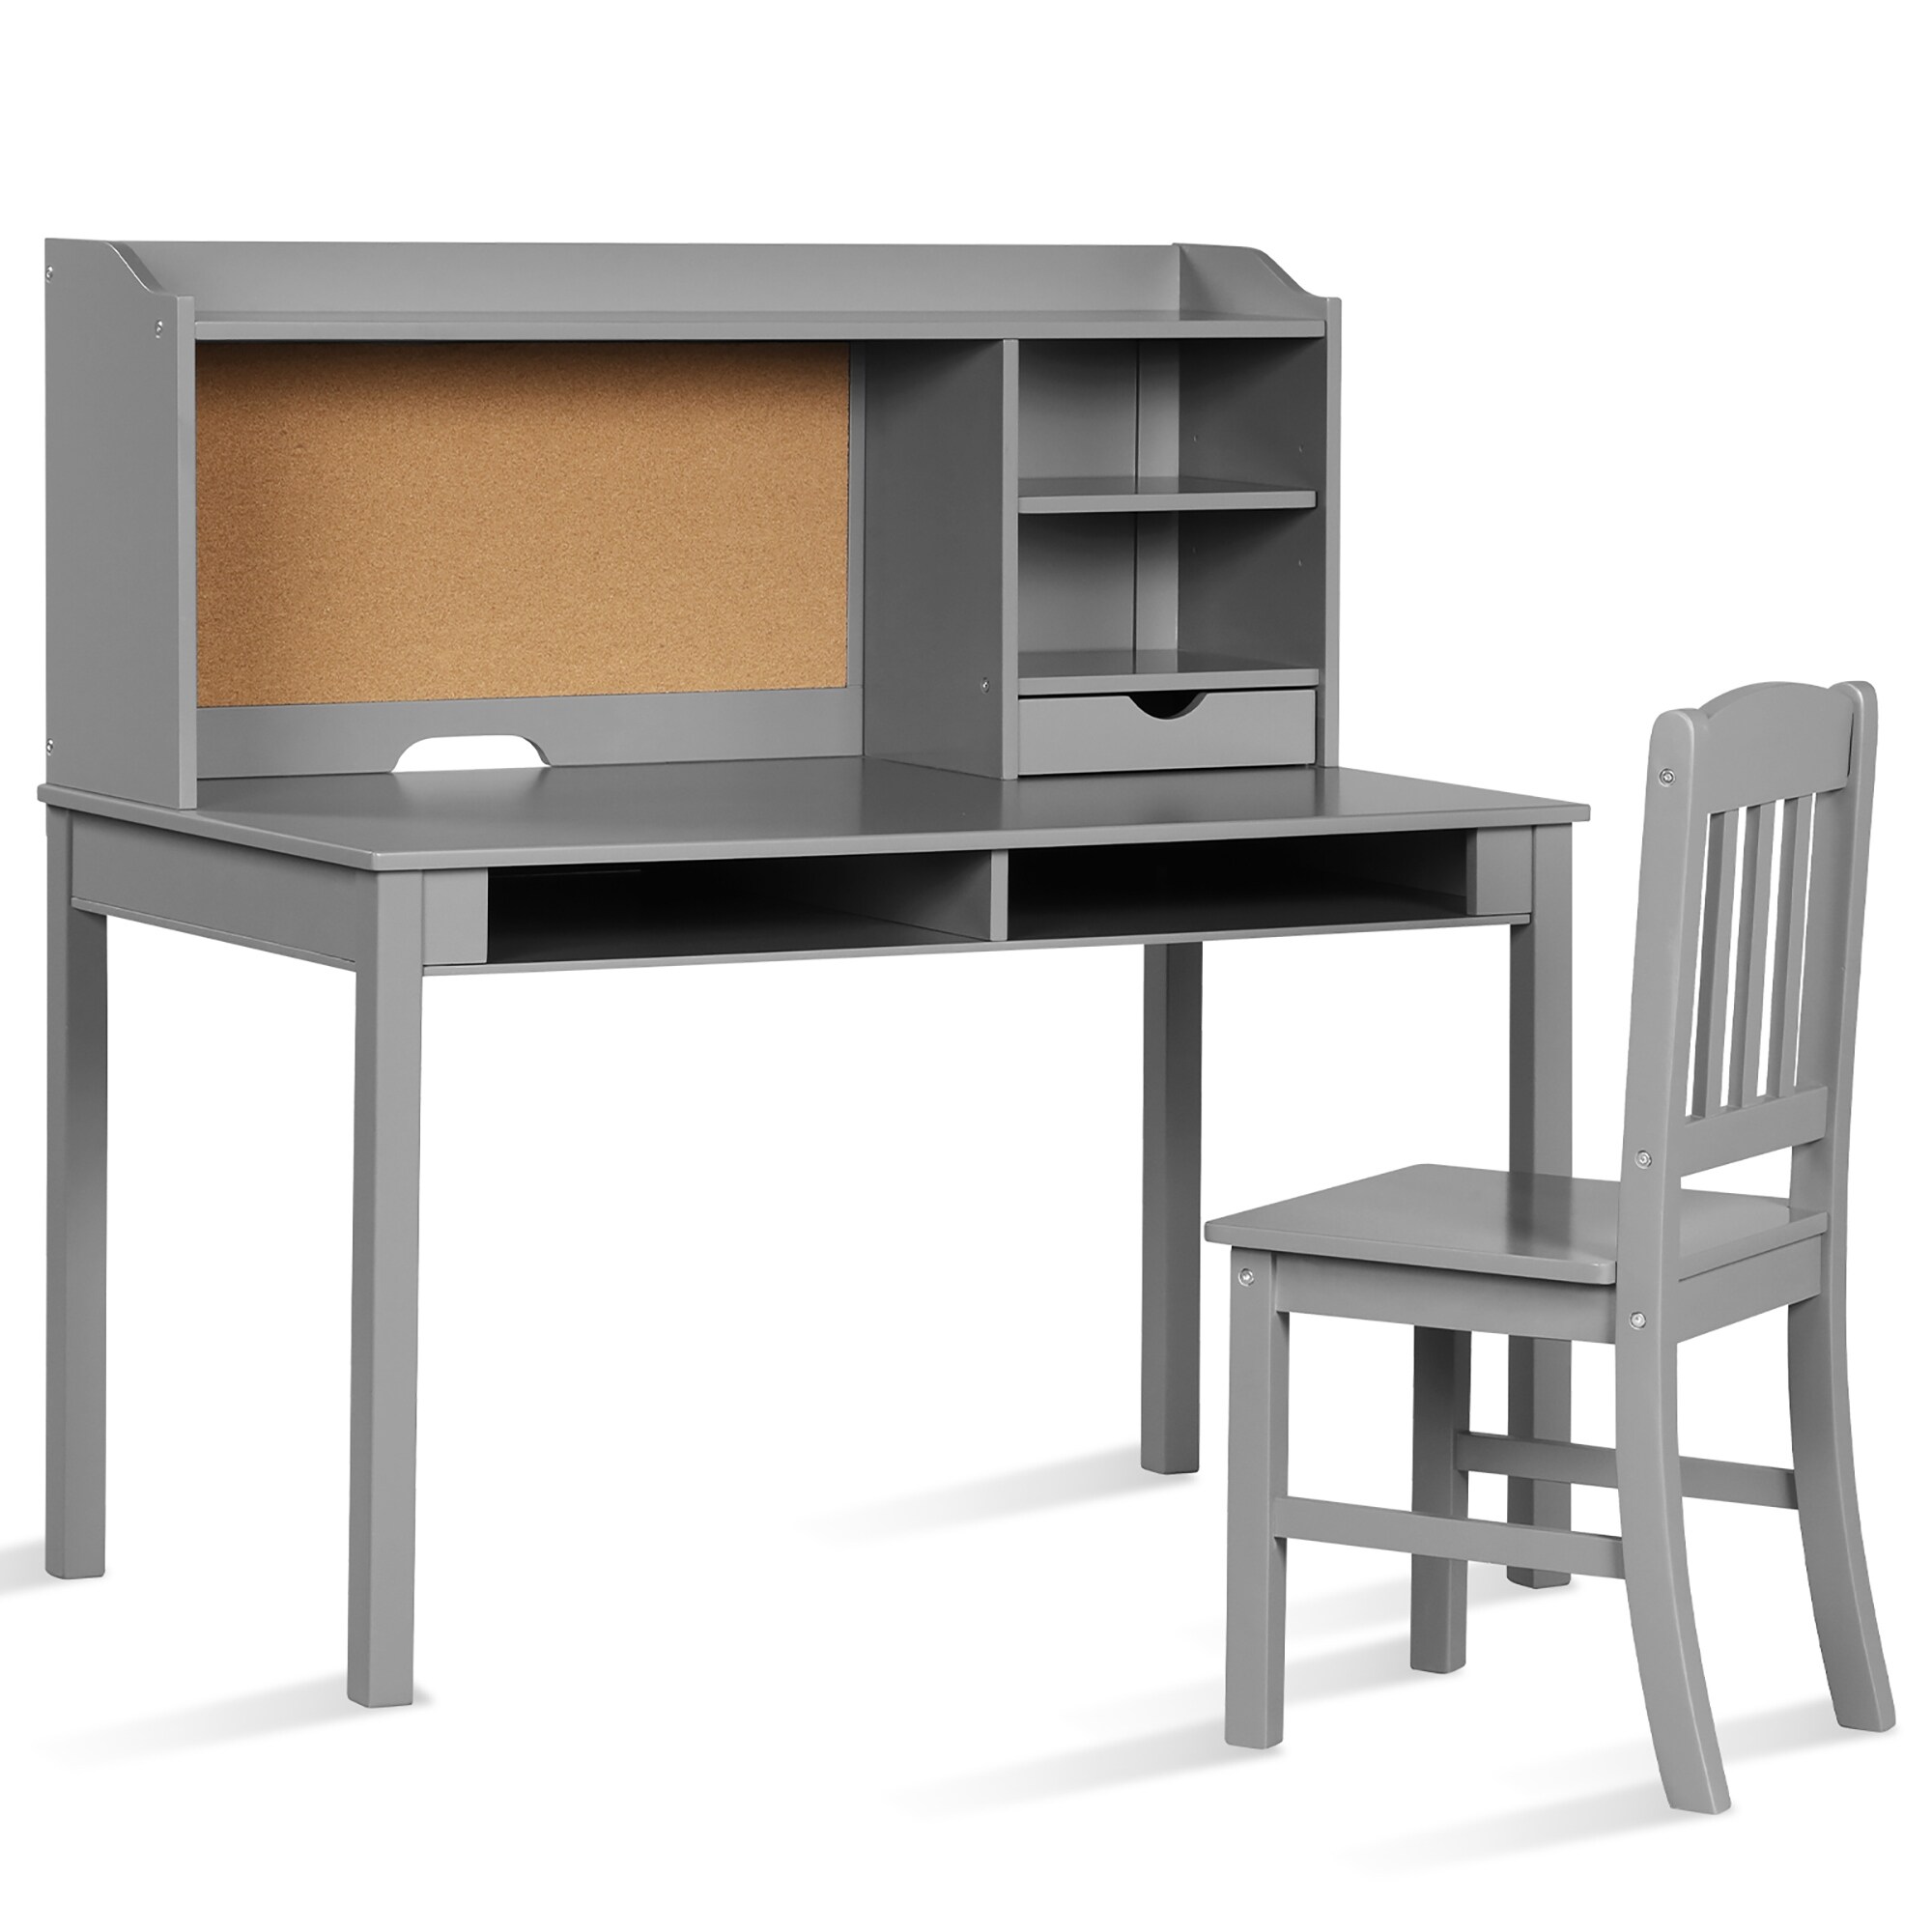 GUIDECRAFT Child's Wooden JR Roll-Top Desk (Children's Wooden Secretary Desk  & Chair Set)